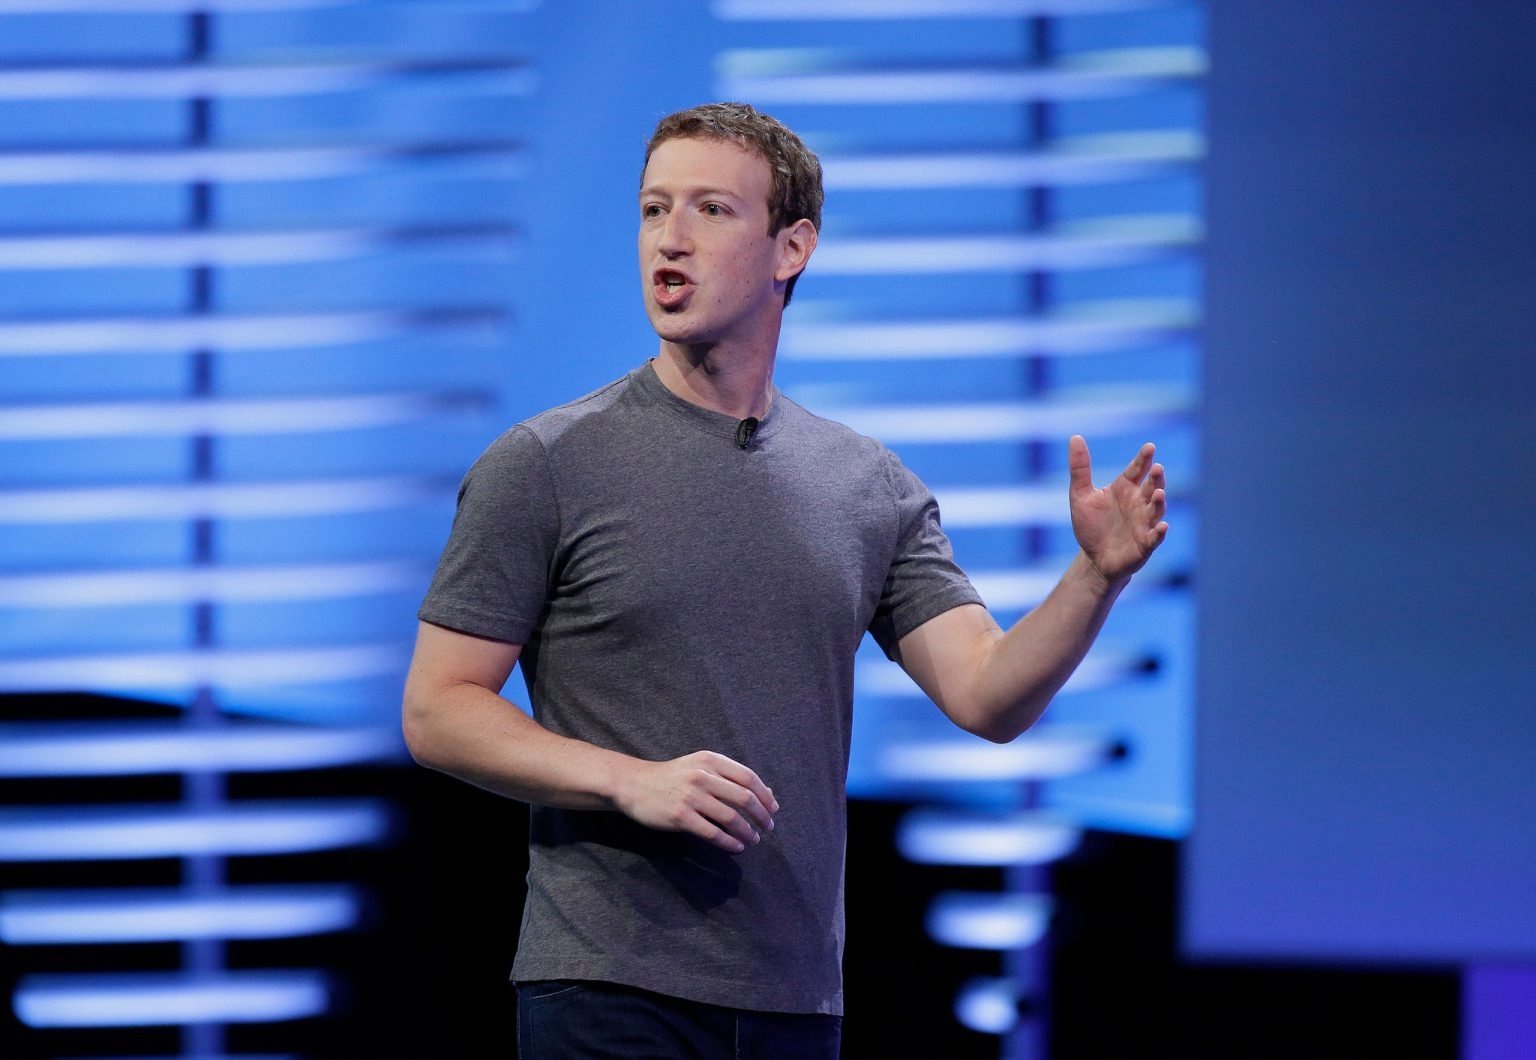 Mark Zuckerberg, CEO and co-founder of Meta